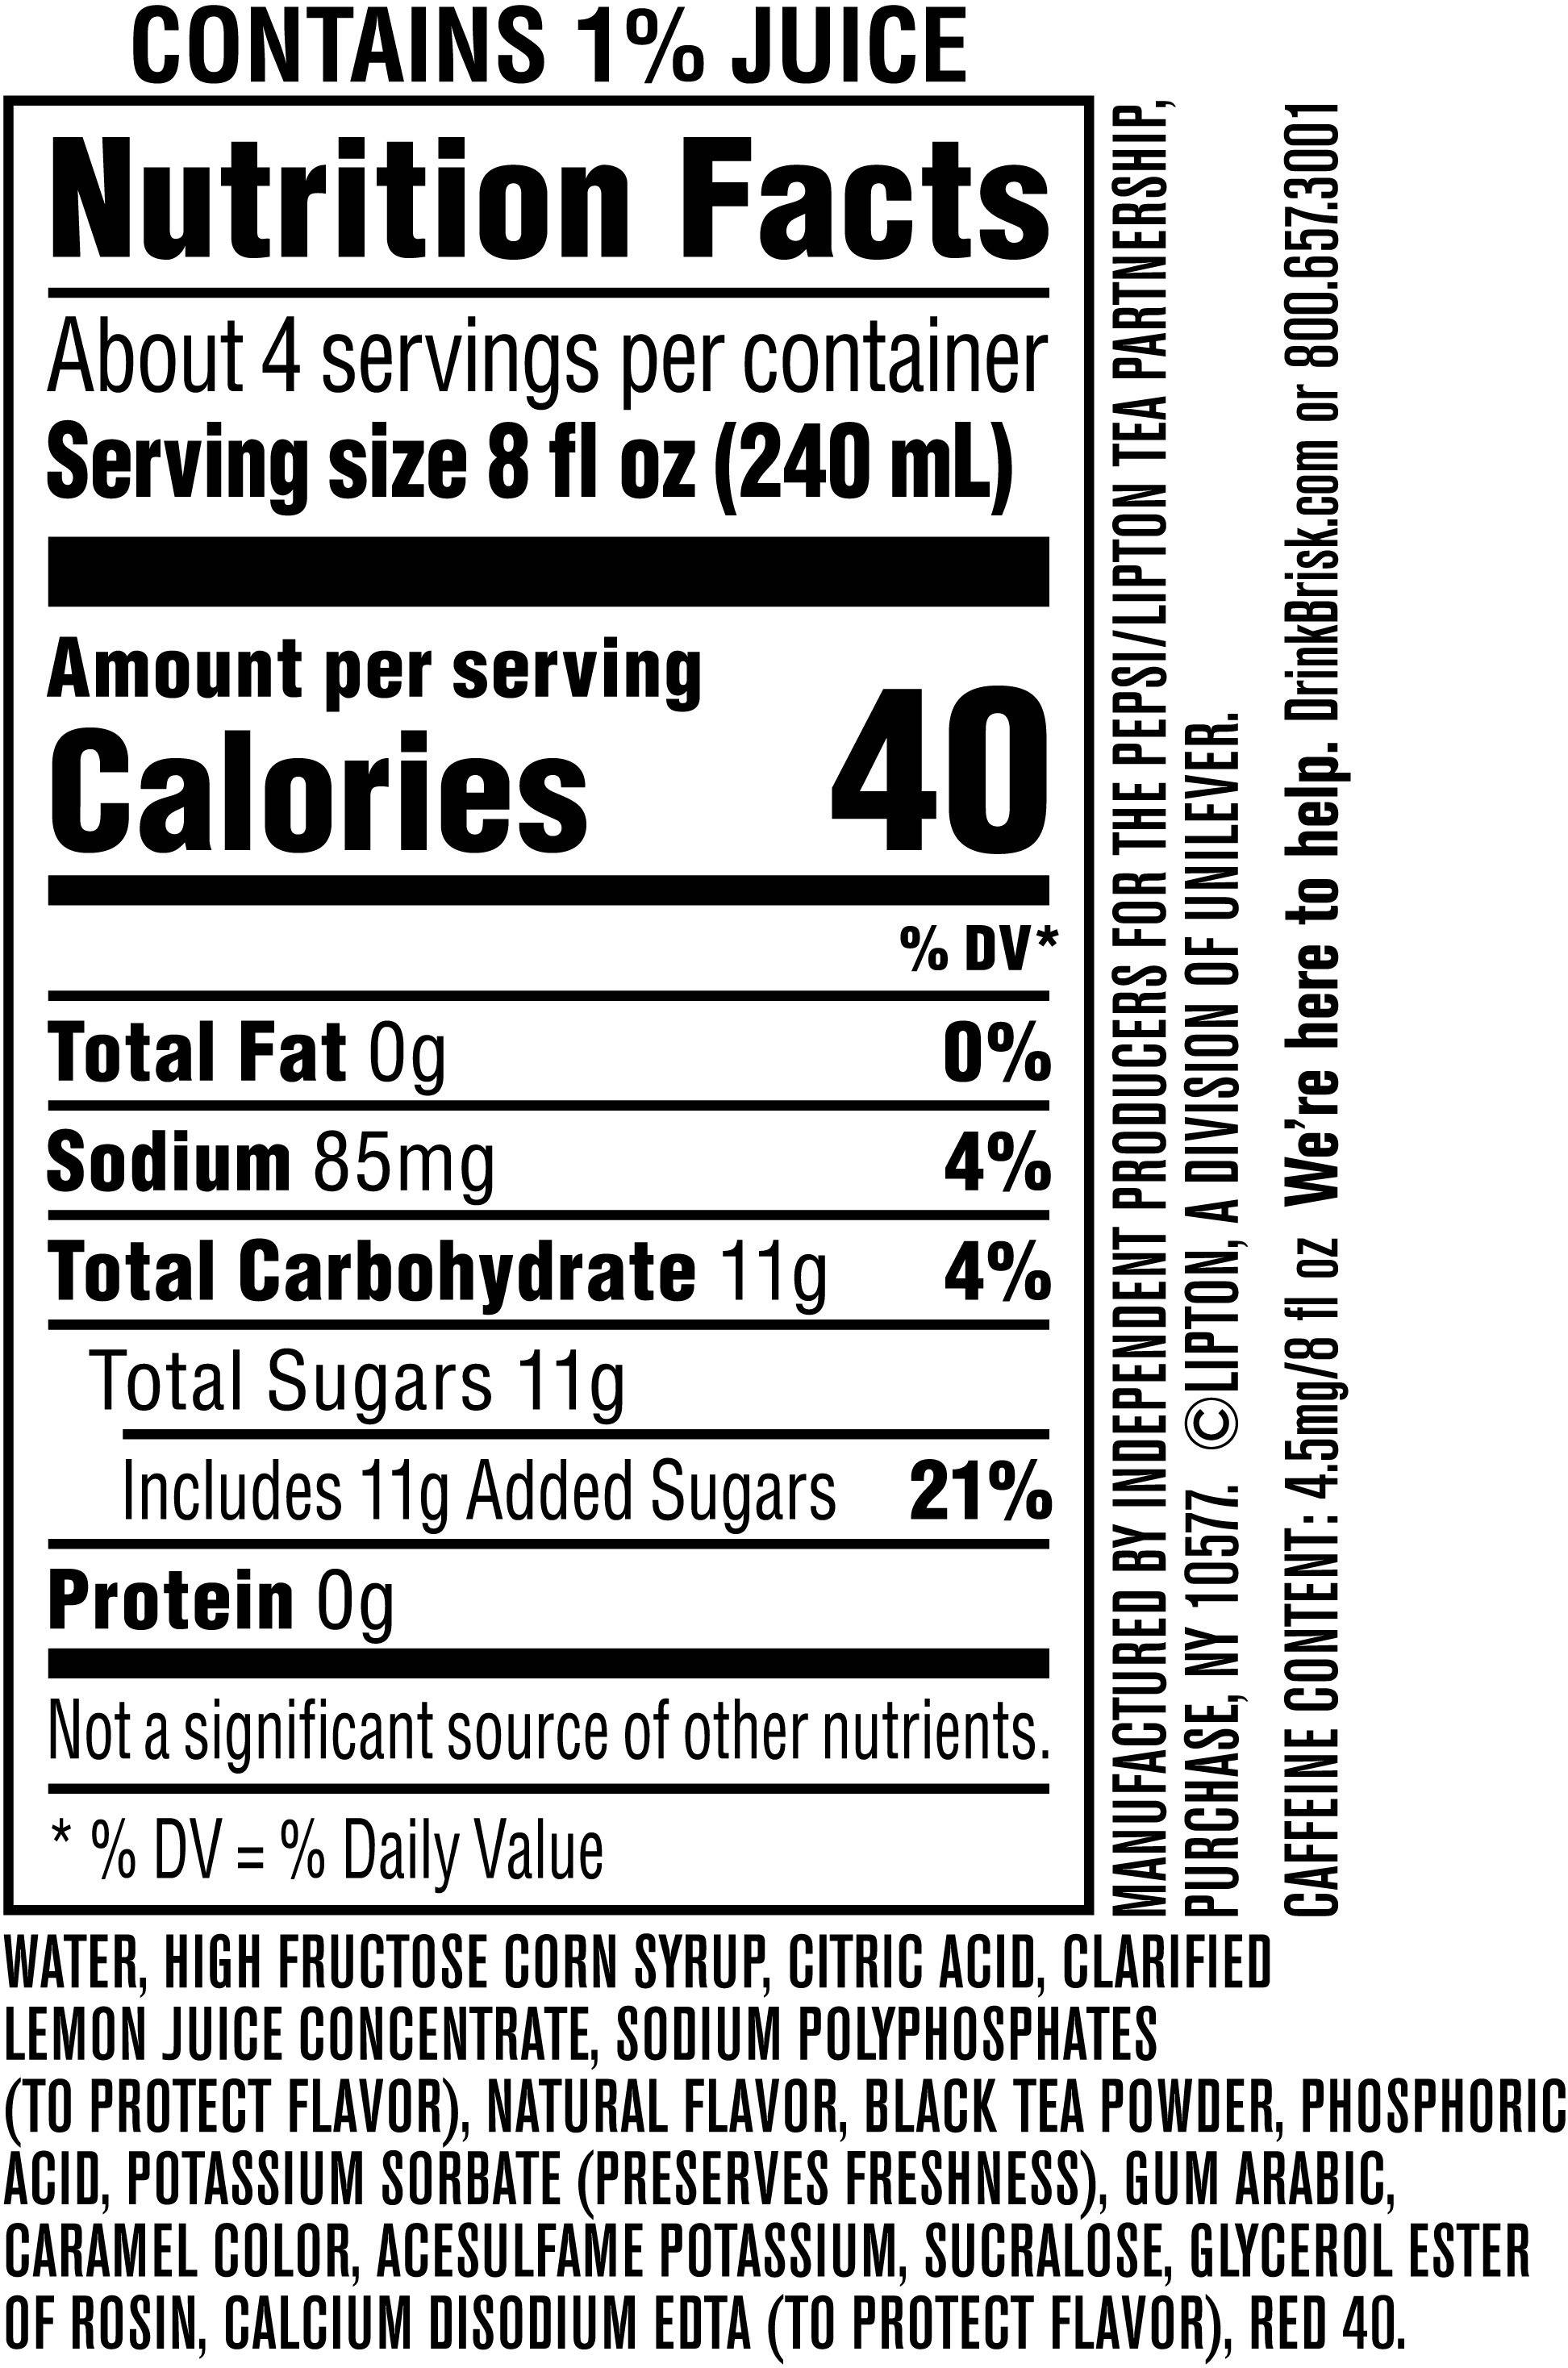 Image describing nutrition information for product Brisk Iced Tea + Lemonade